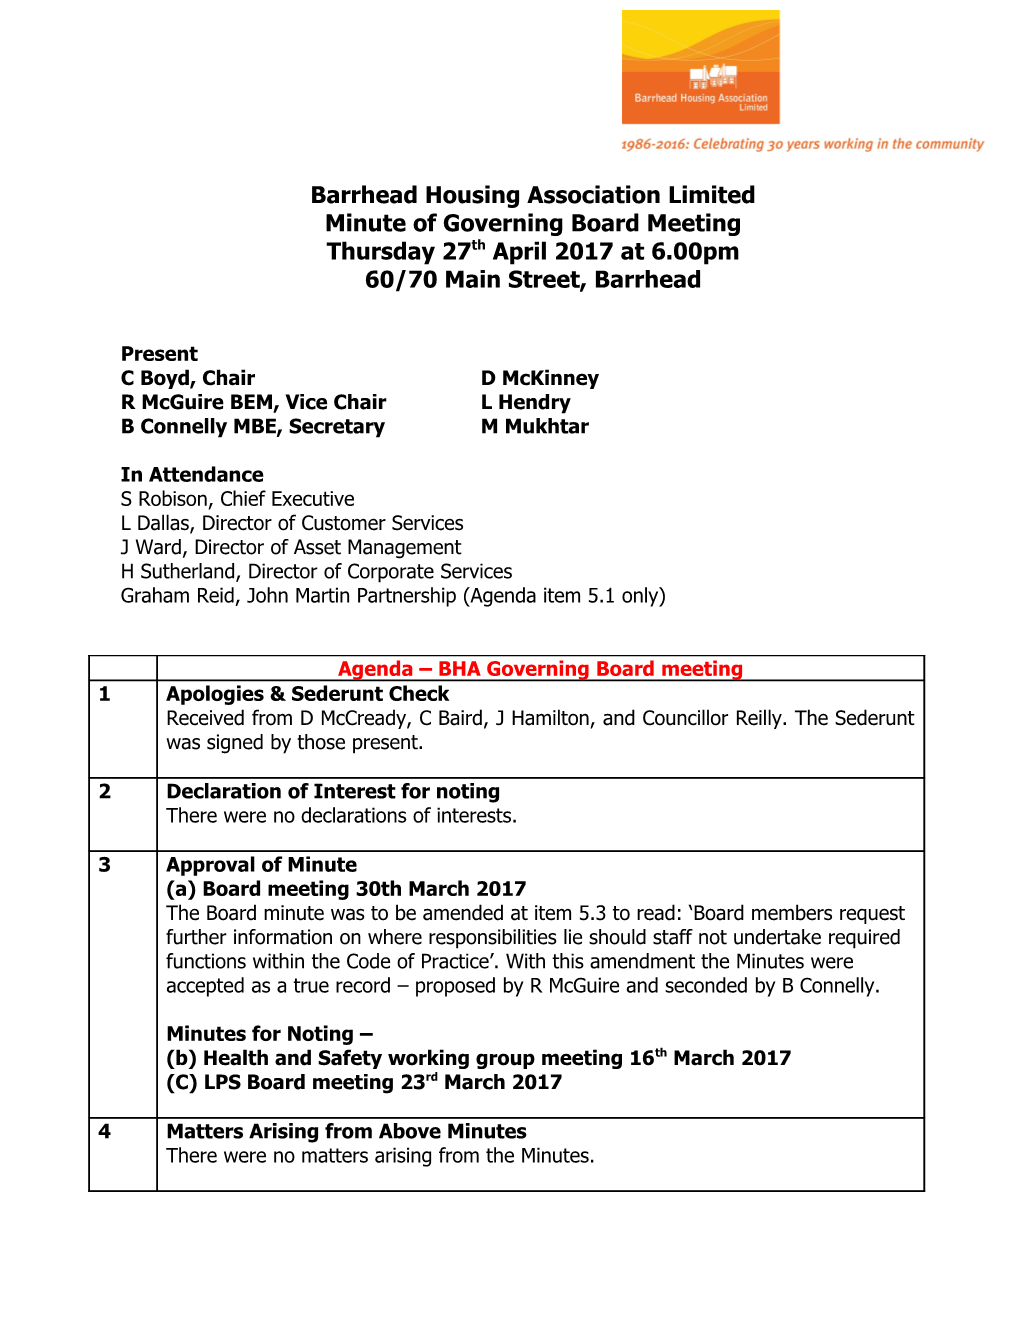 Barrhead Housing Association Limited s1